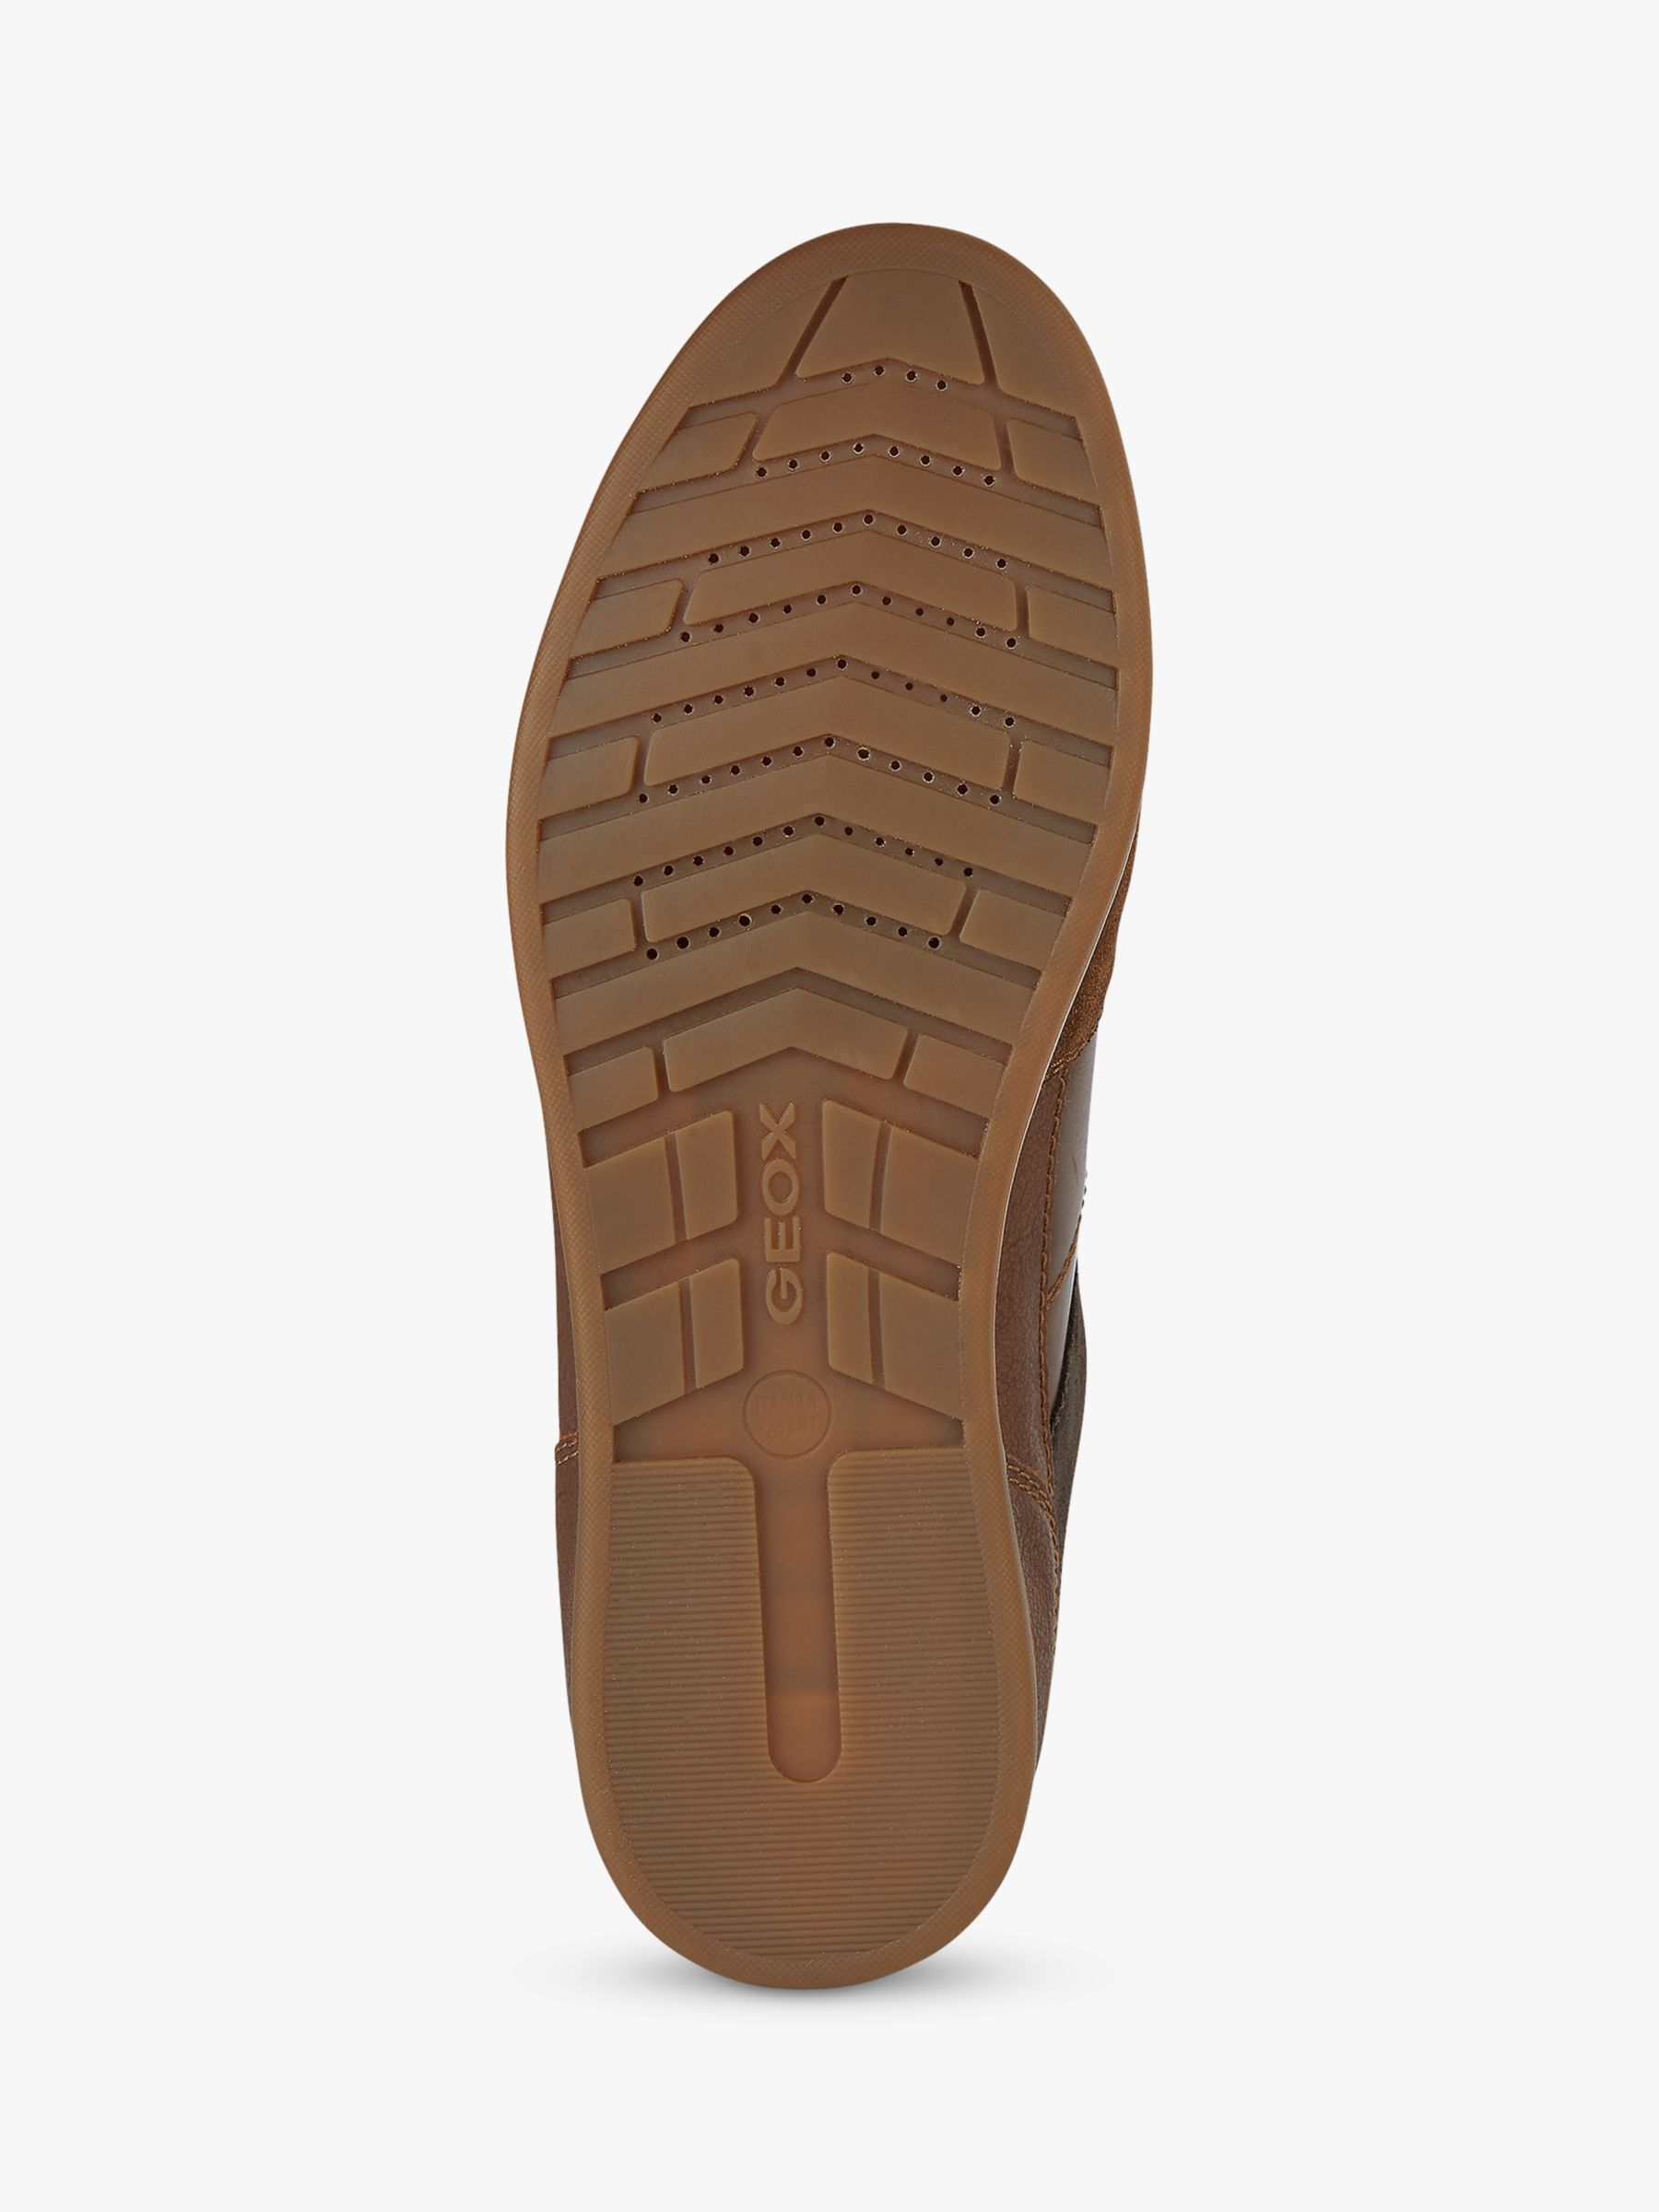 Geox Renan Low Cut Sneakers, Brown, EU39